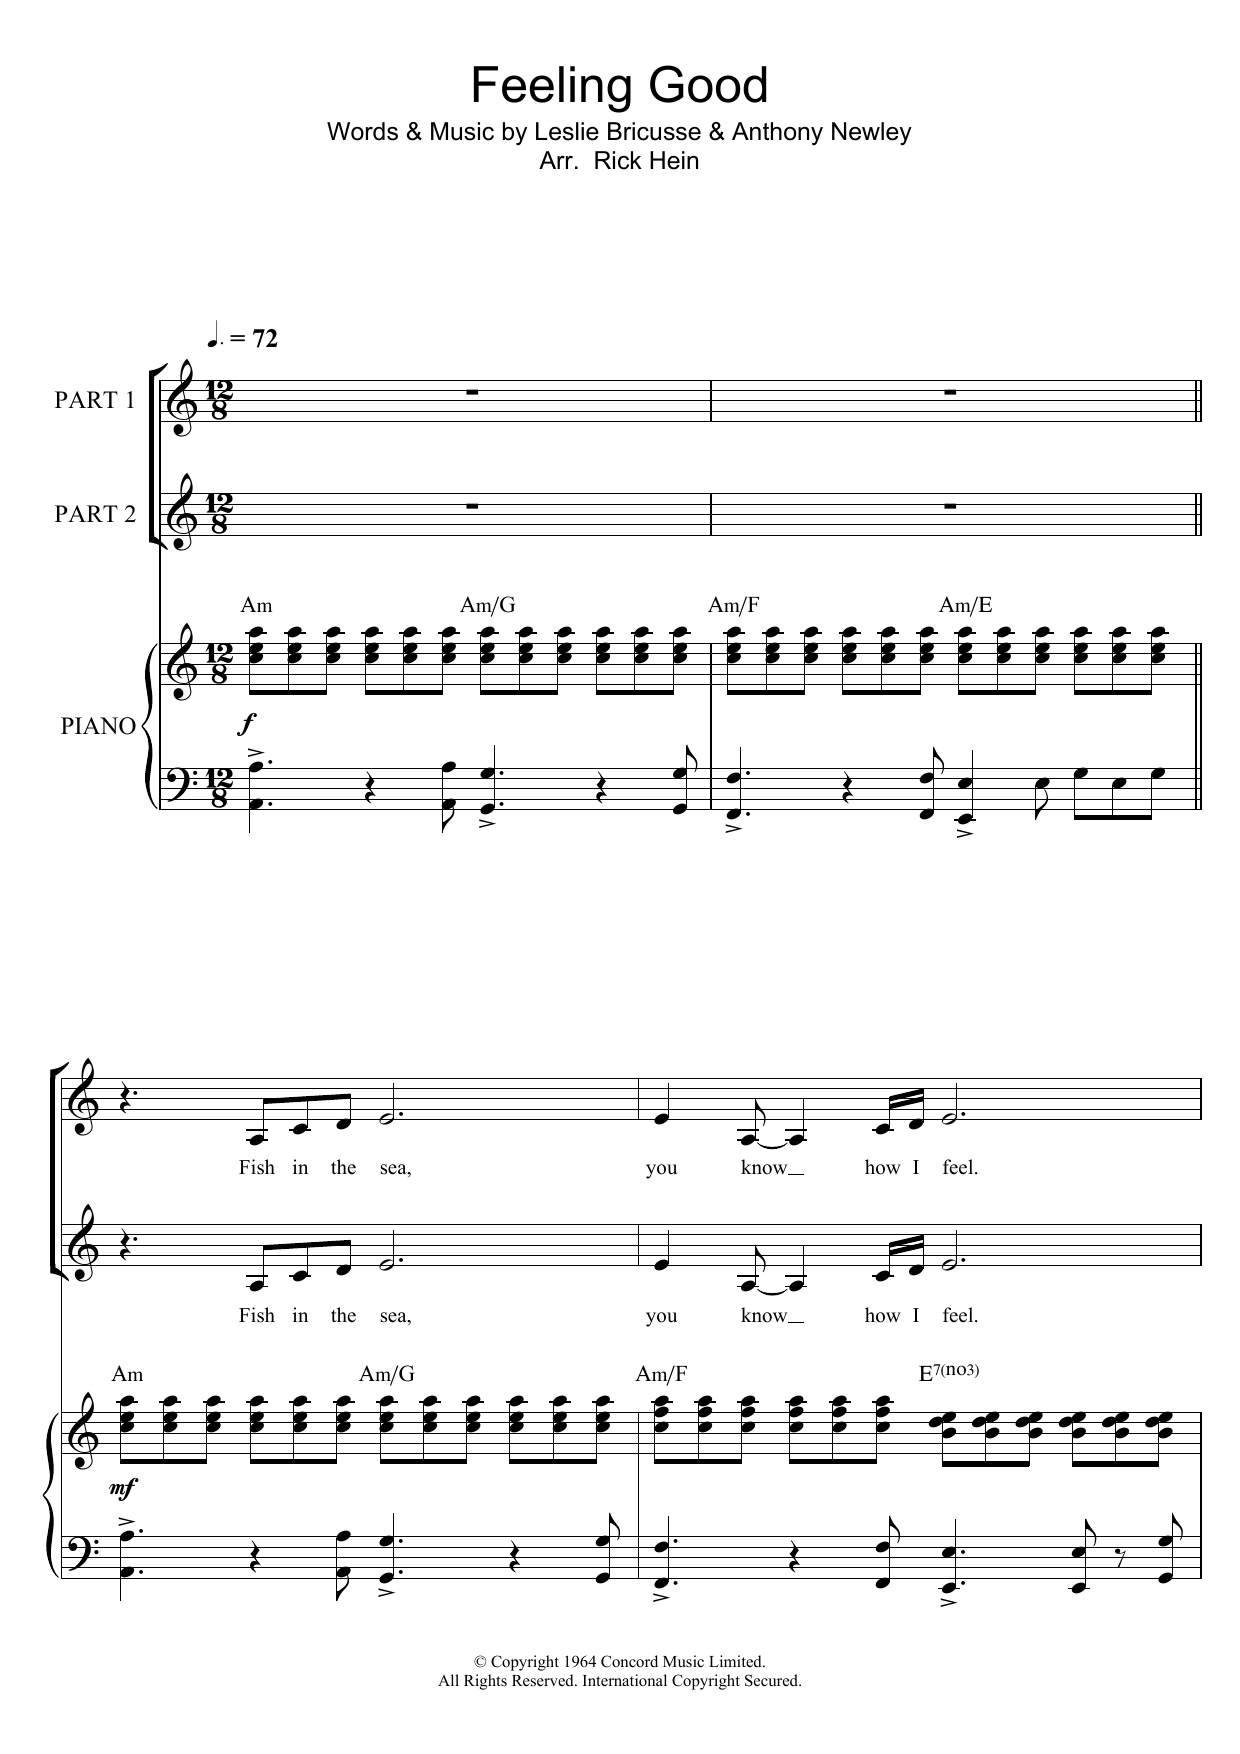 Nina Simone Feeling Good (arr. Rick Hein) Sheet Music Notes & Chords for 2-Part Choir - Download or Print PDF